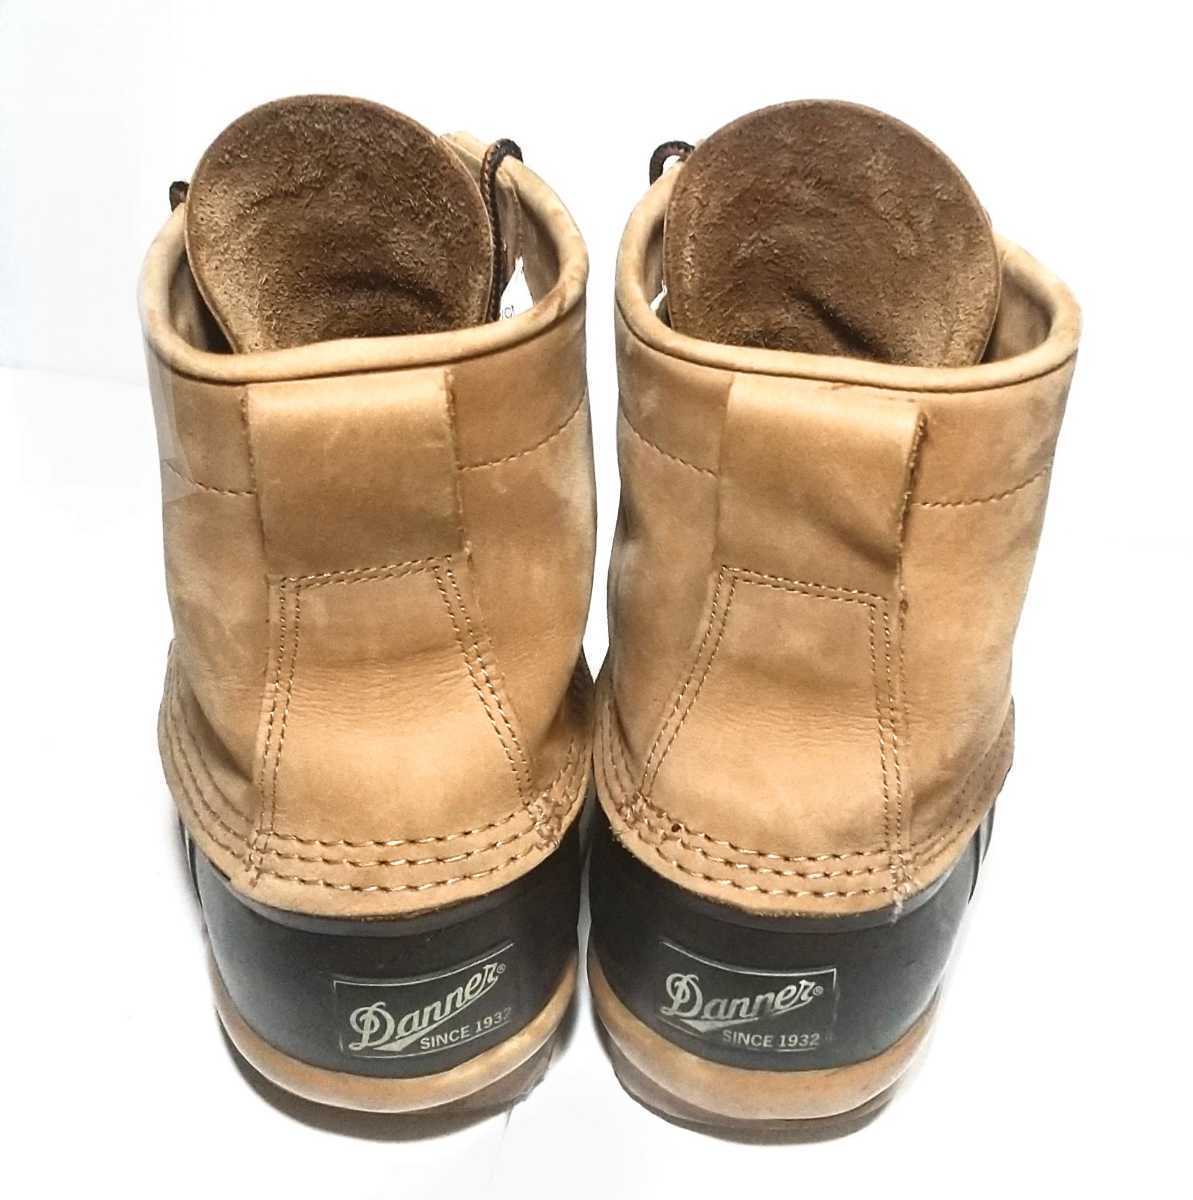  prompt decision Danner Danner men's SLUSHER 5EYELETS boots pattern number D-9602 US10D(28cm rank ) rubber sole Camel Camel color outdoor casual used 